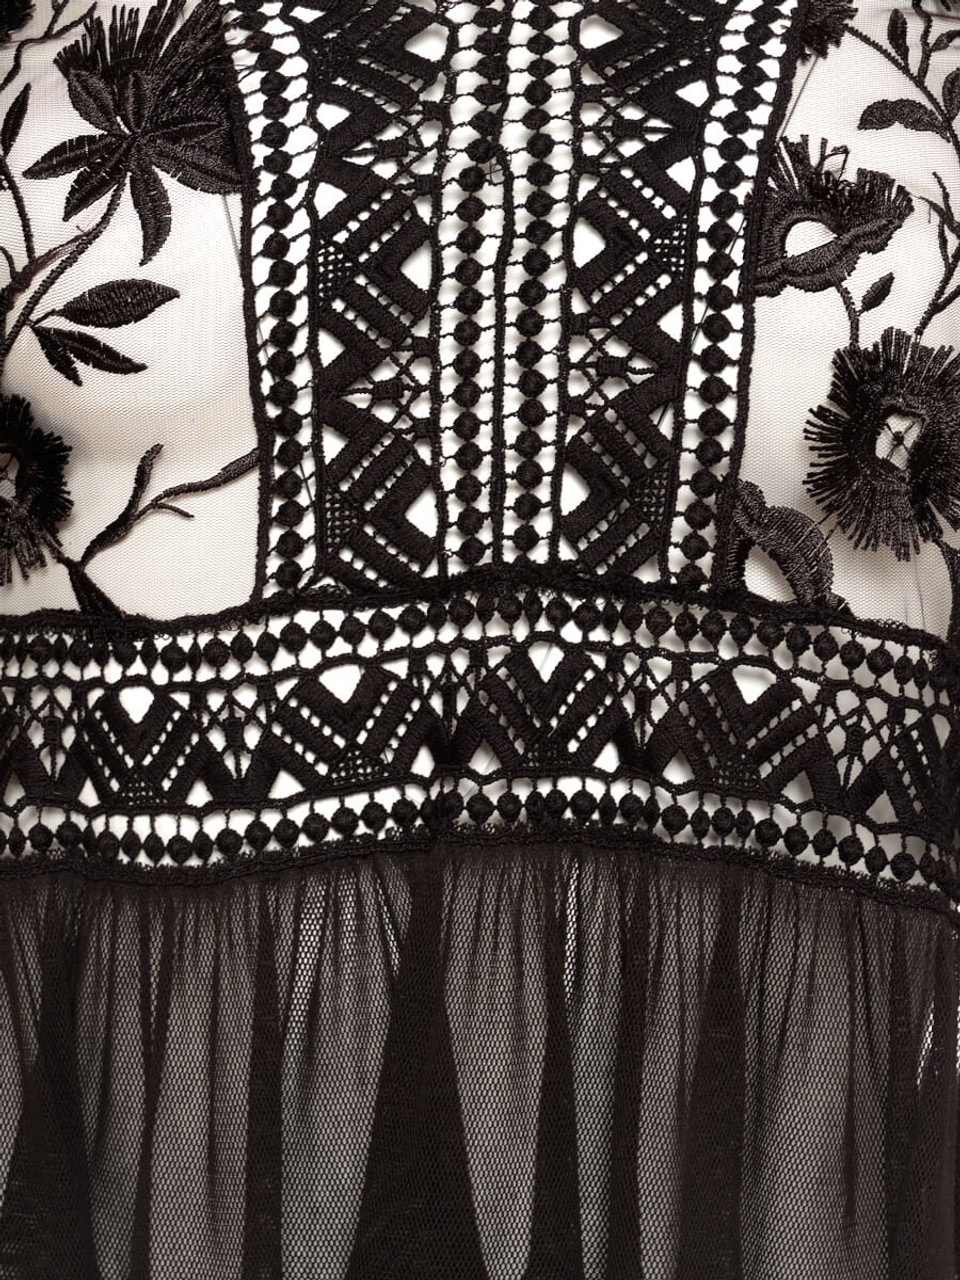 Women Alberta Ferretti Crochet Fringe Dress -  Black Size M IT 42 US 6